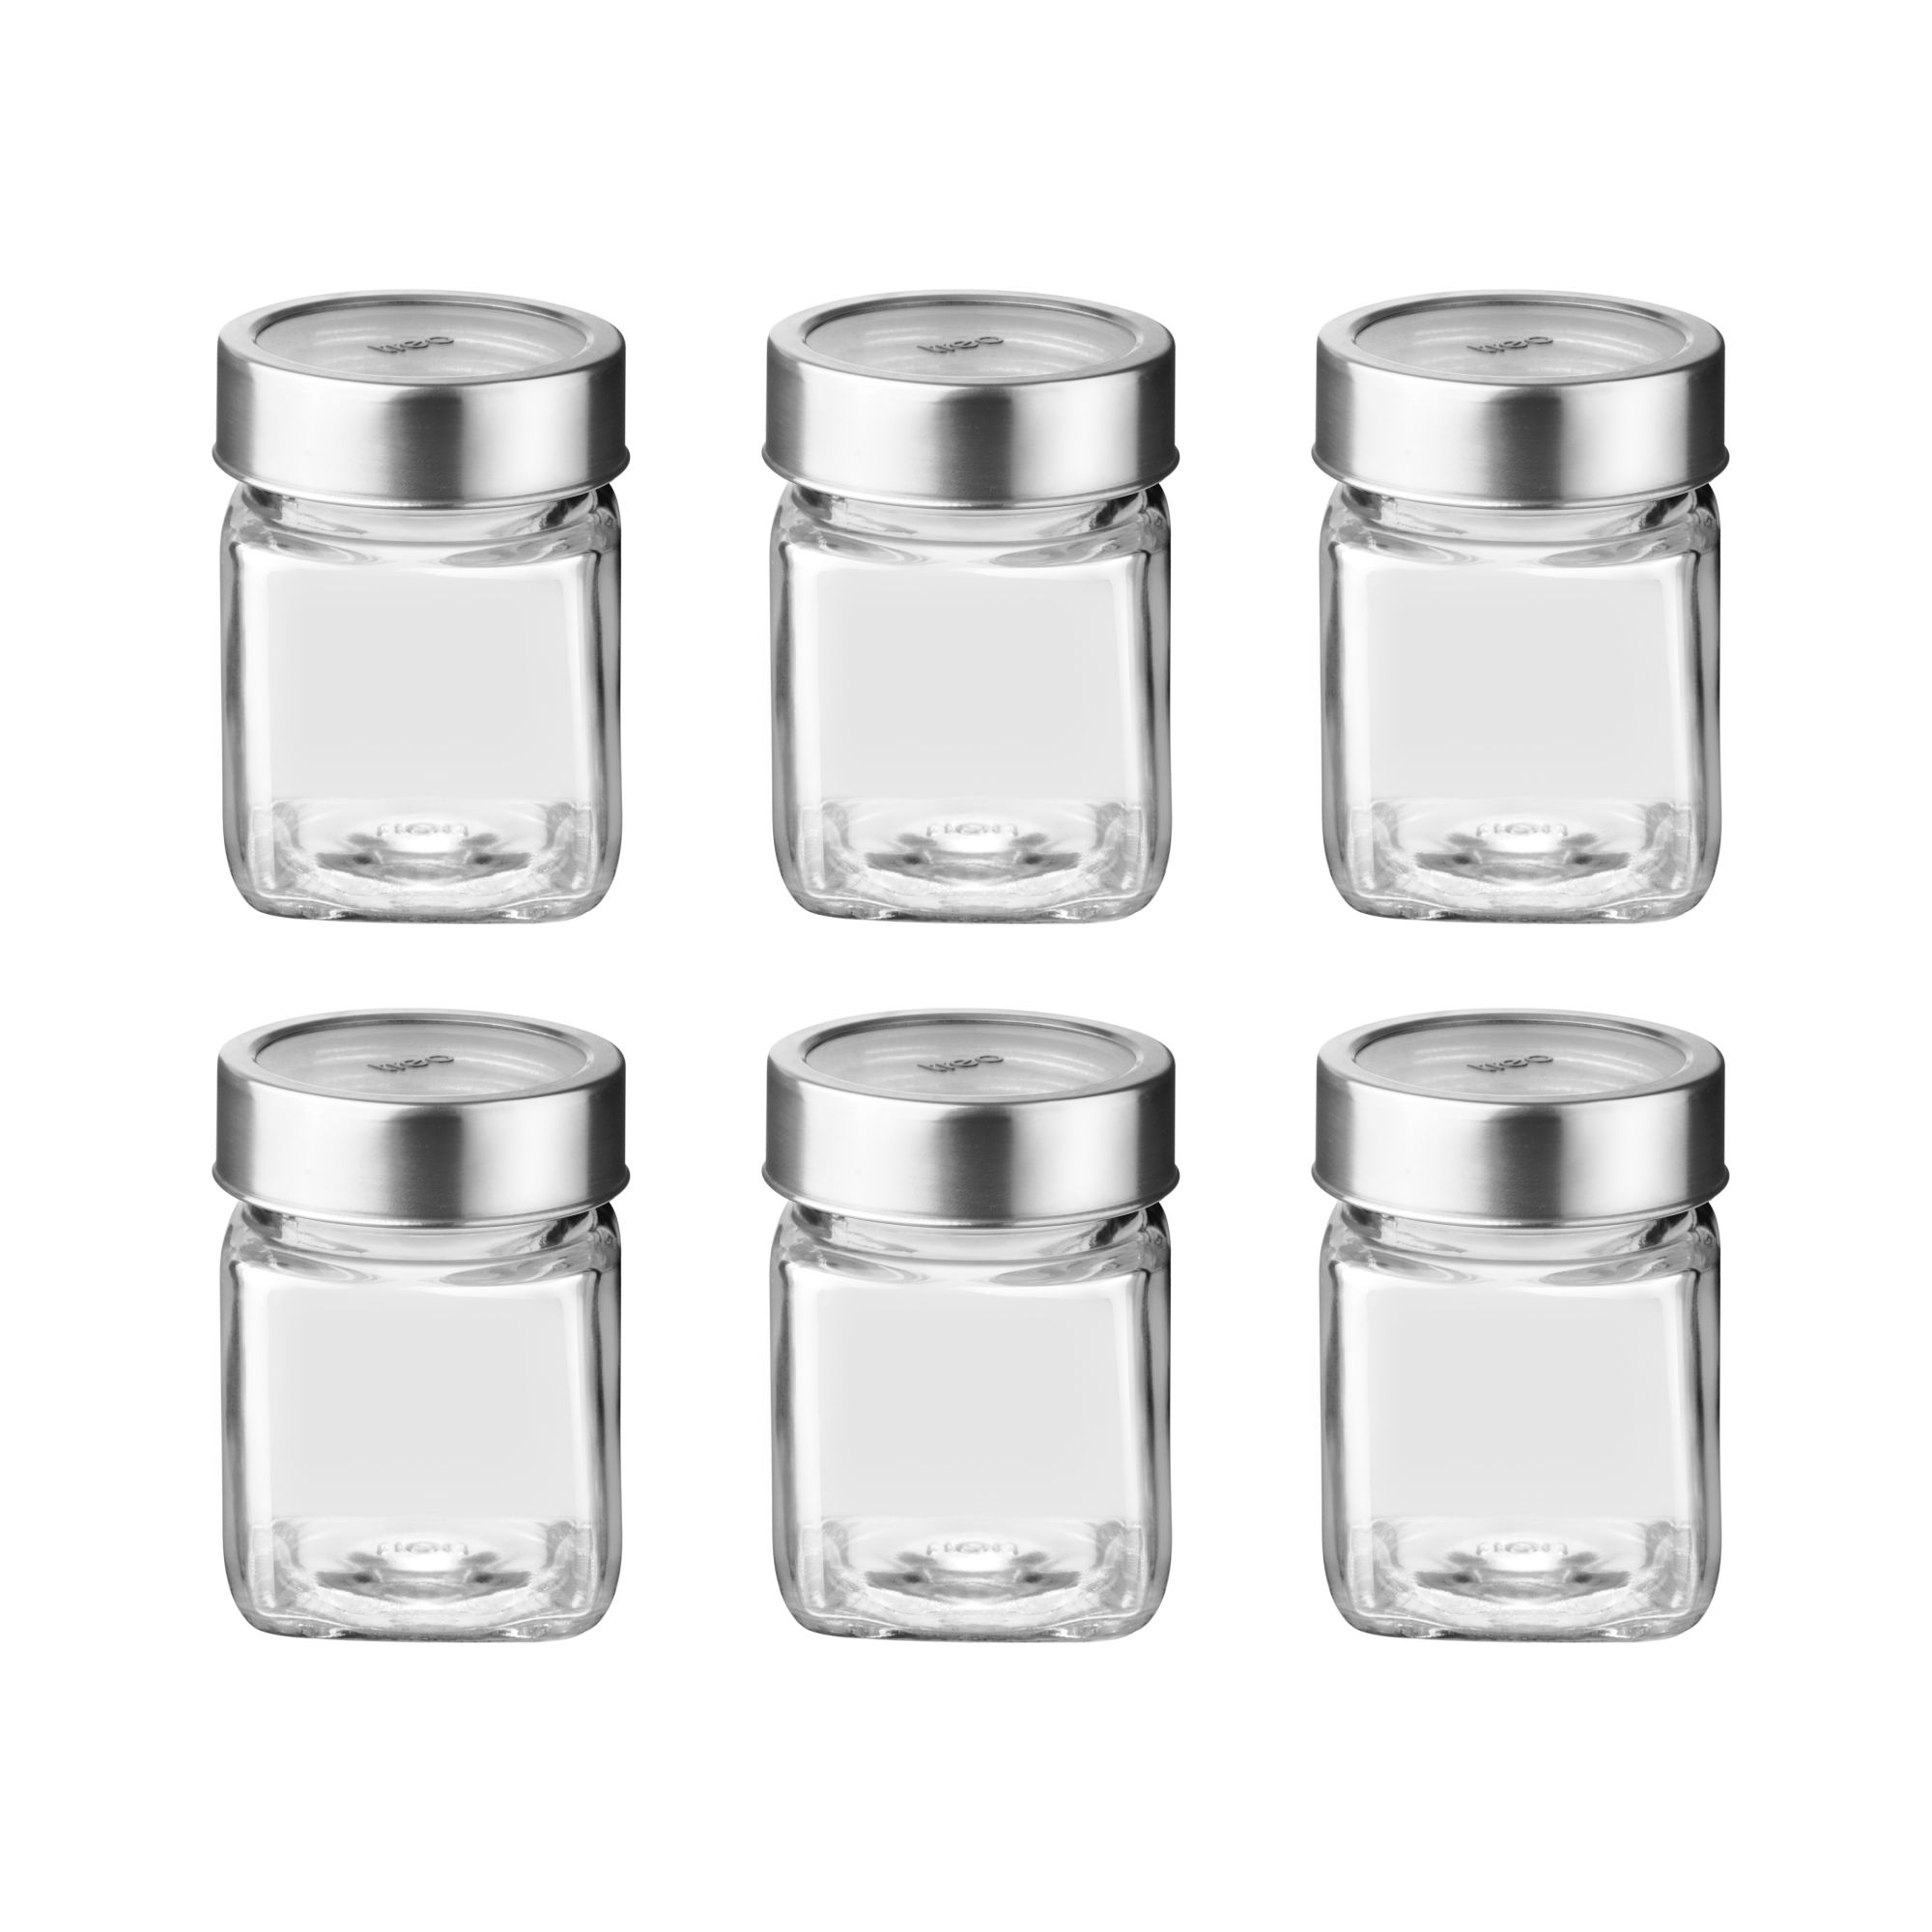 Treo Cube Glass Spice Jar